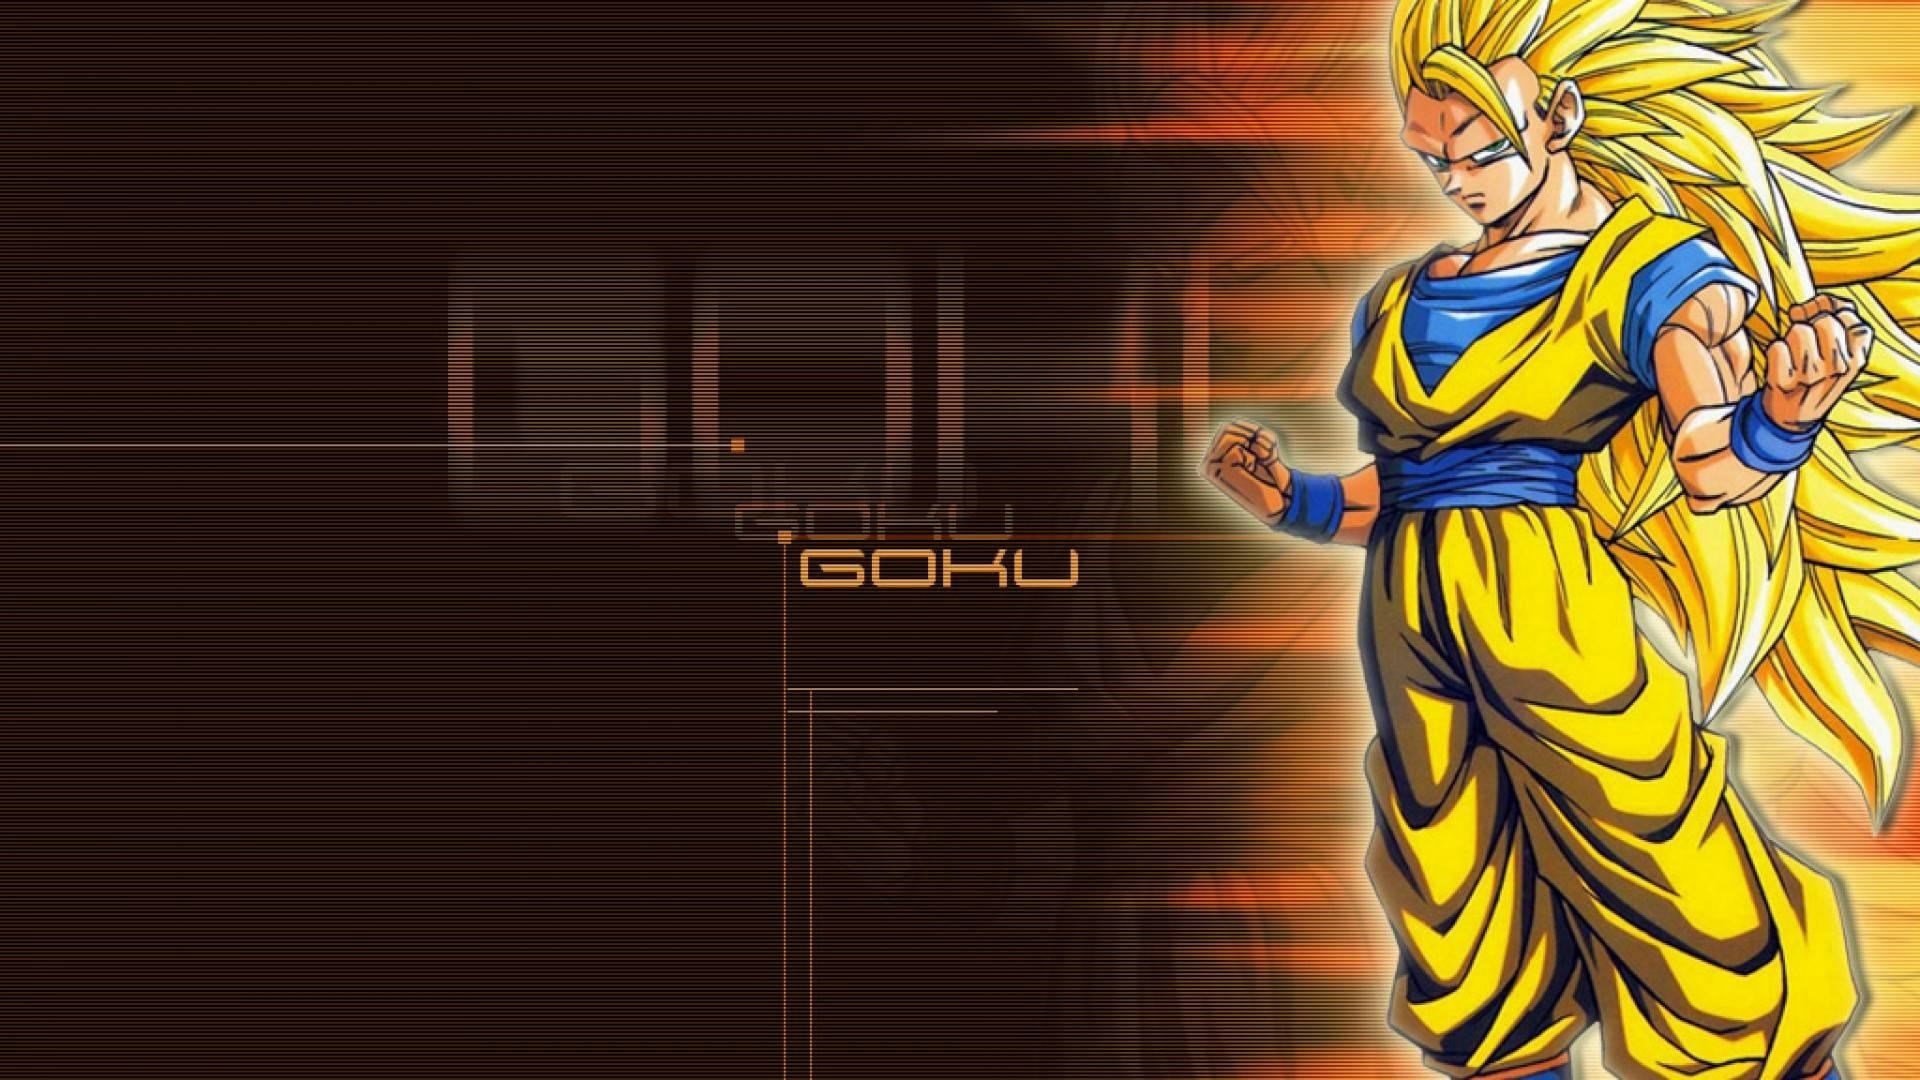 Wallpaper.wiki Goku Dragon Ball Z Image Free